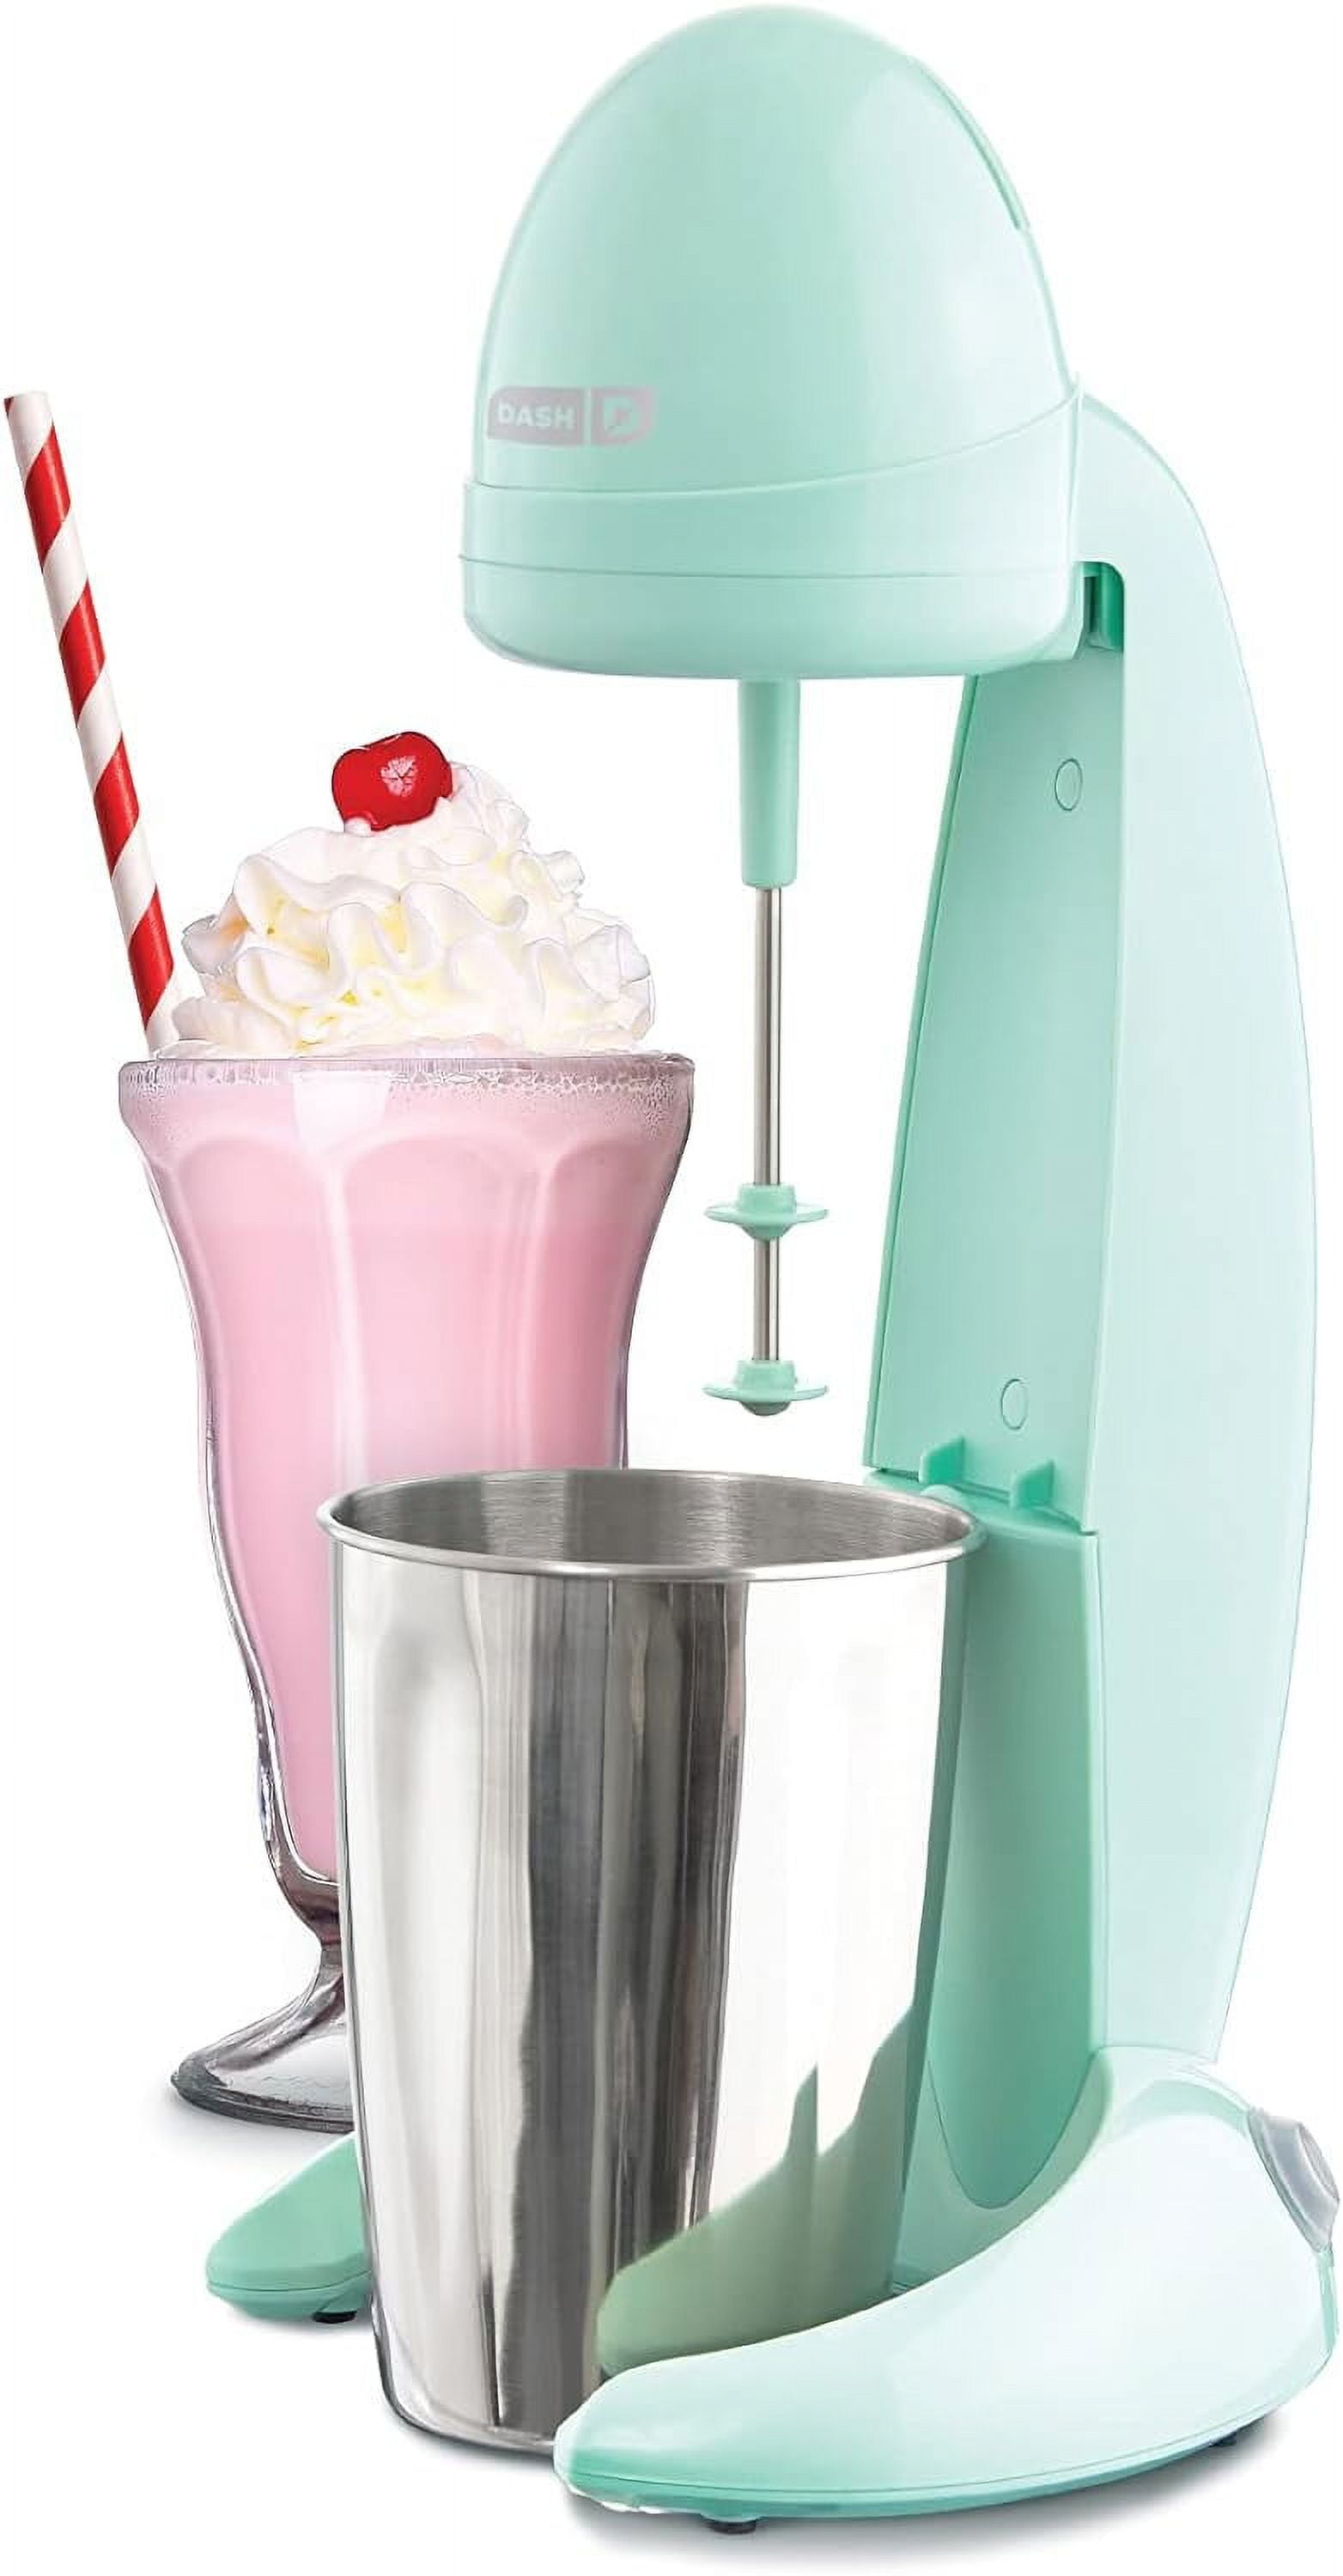 Milkshake Maker Machine 500ml Ice Cream Smoothies Protein Shakes Cocktail  Cup